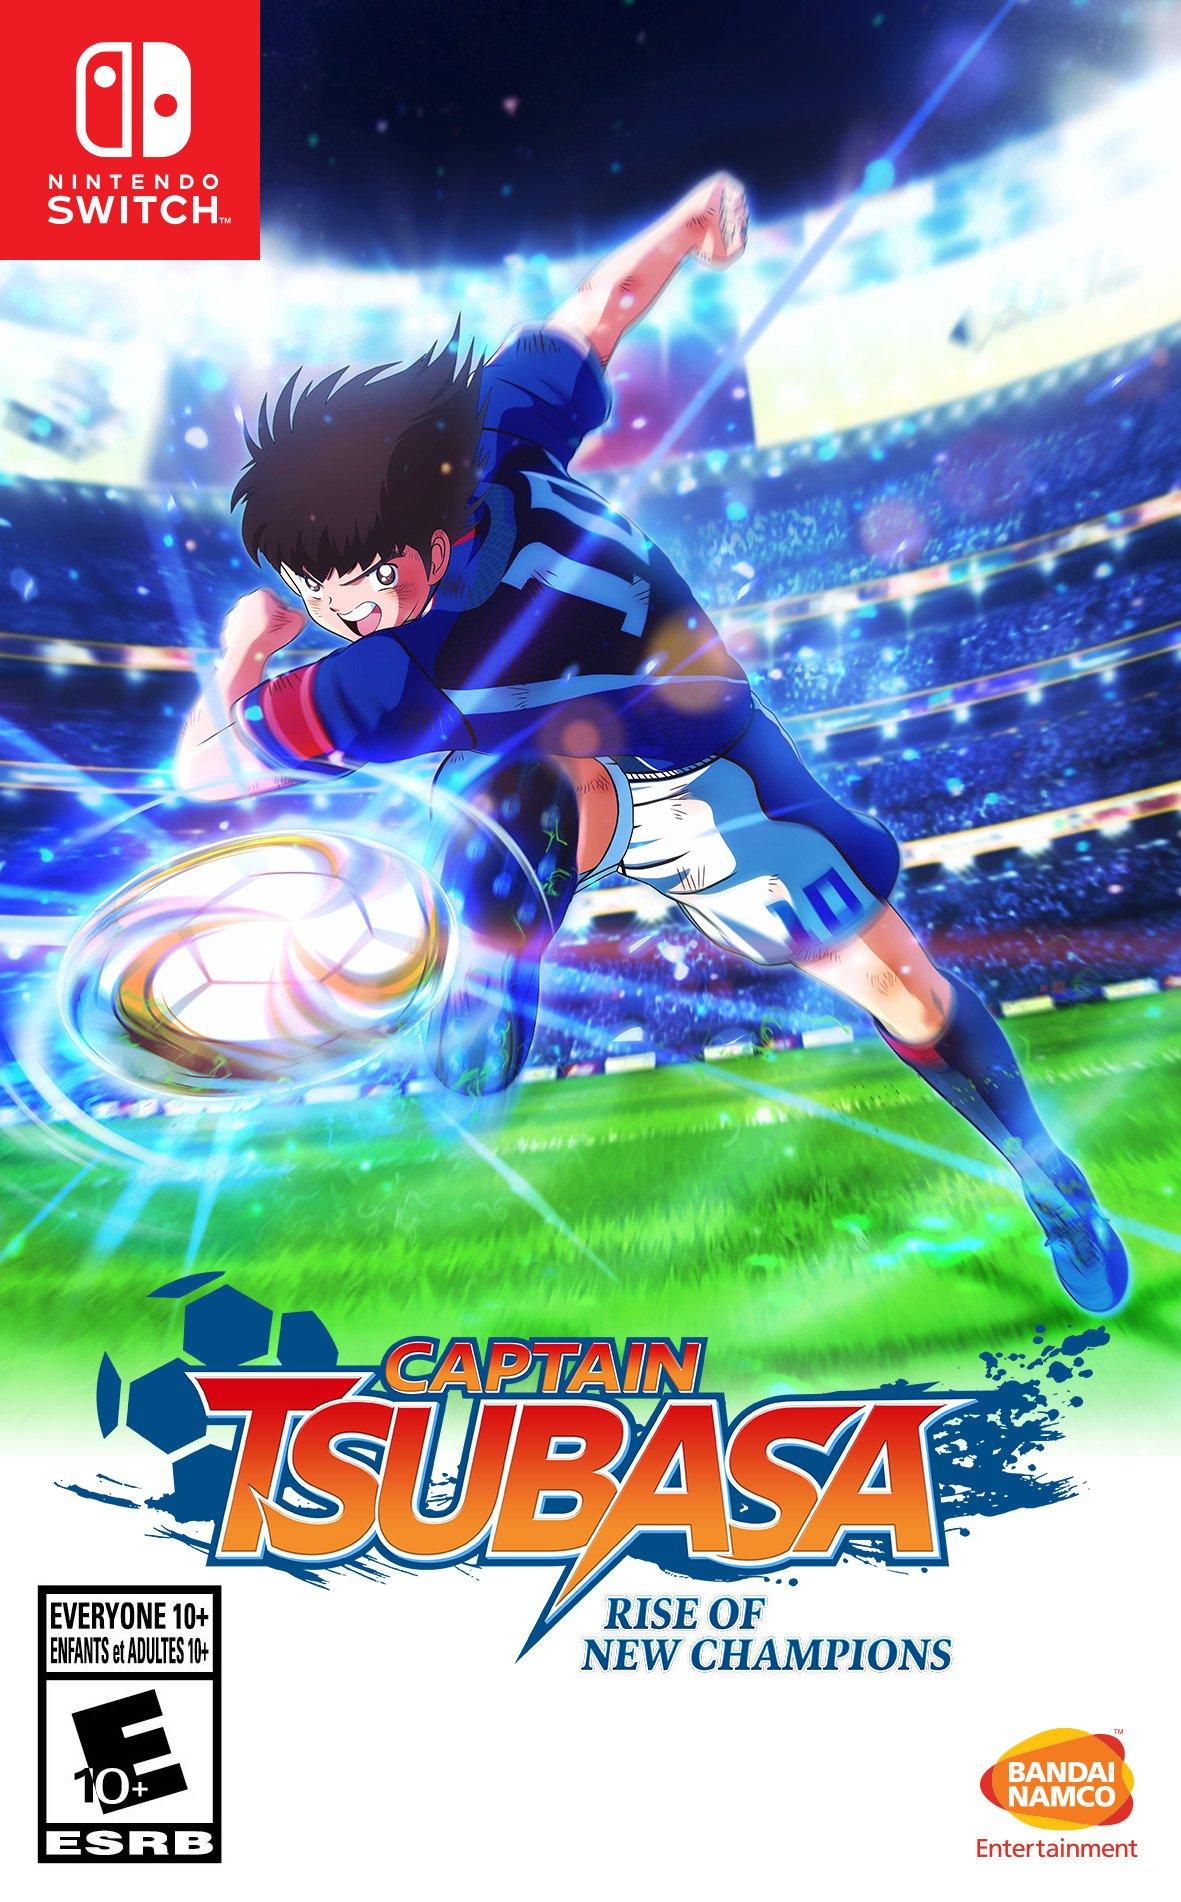 EXCLUSIVE: Tsubasa TV Anime Site Opens!